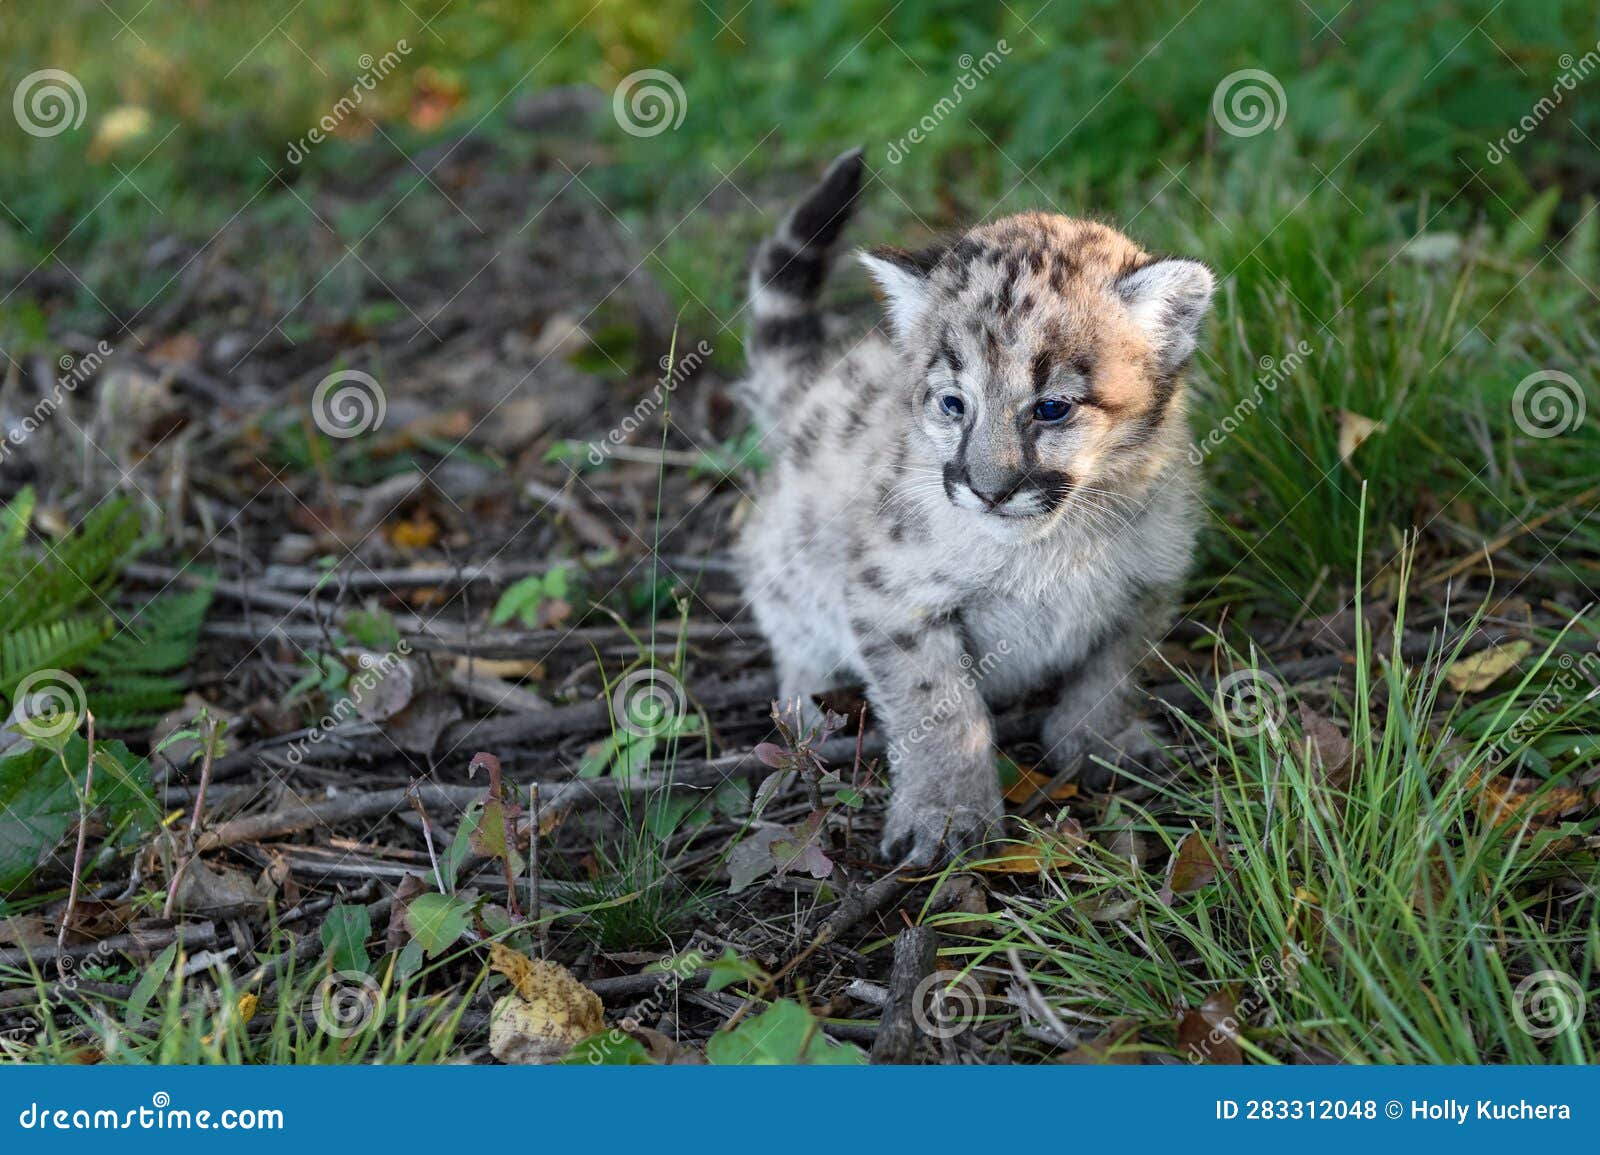 cougar kitten (puma concolor) squats to urinate in grass autumn